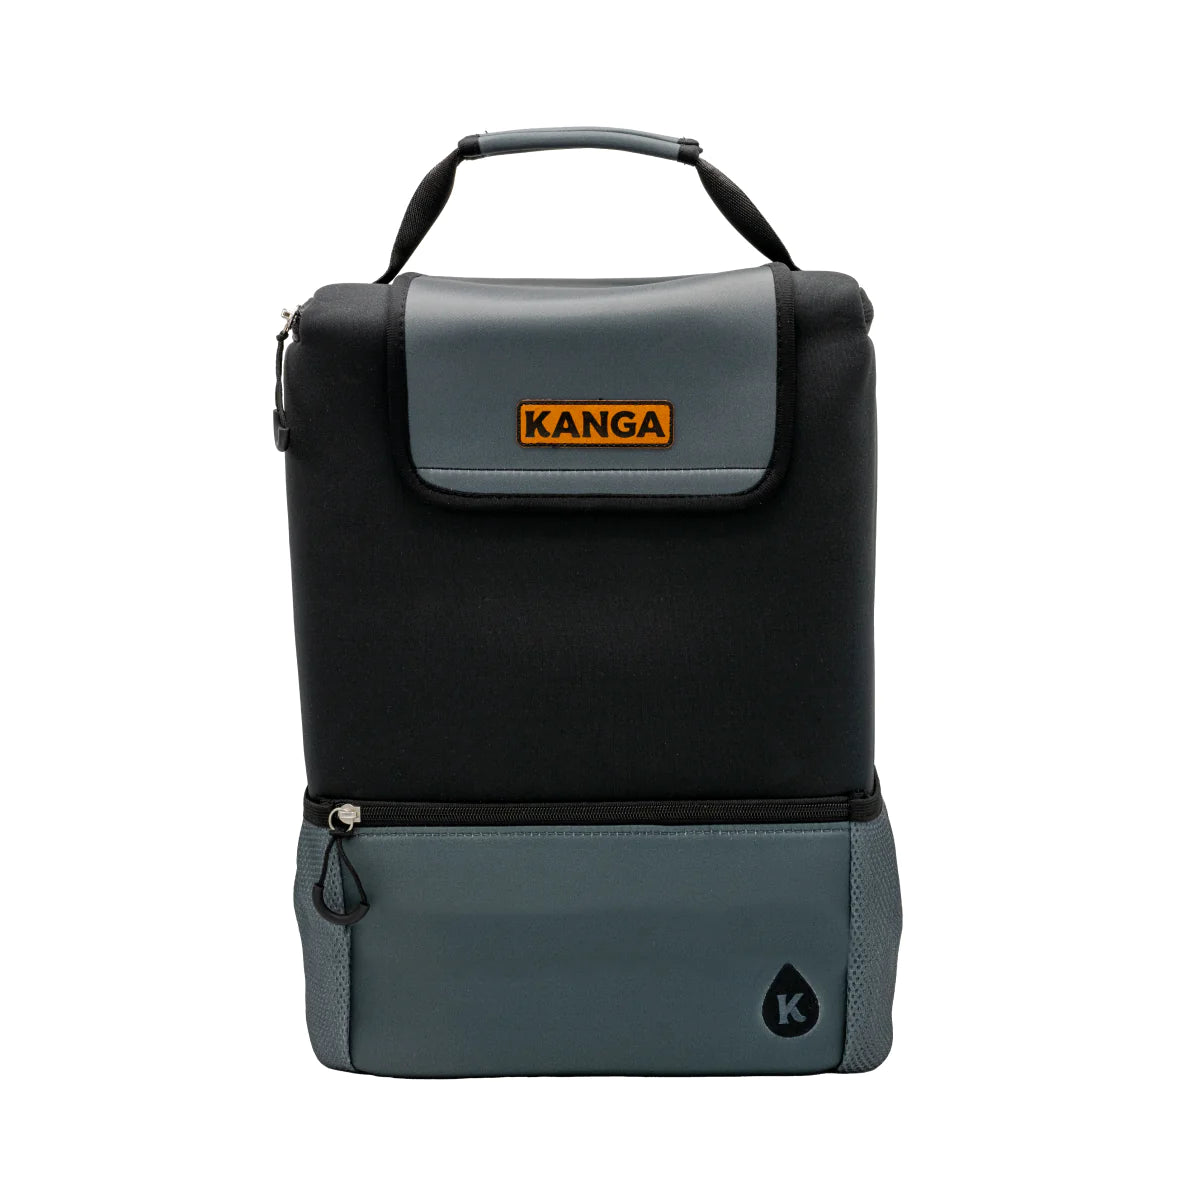 Kanga 24 Backpack Cooler